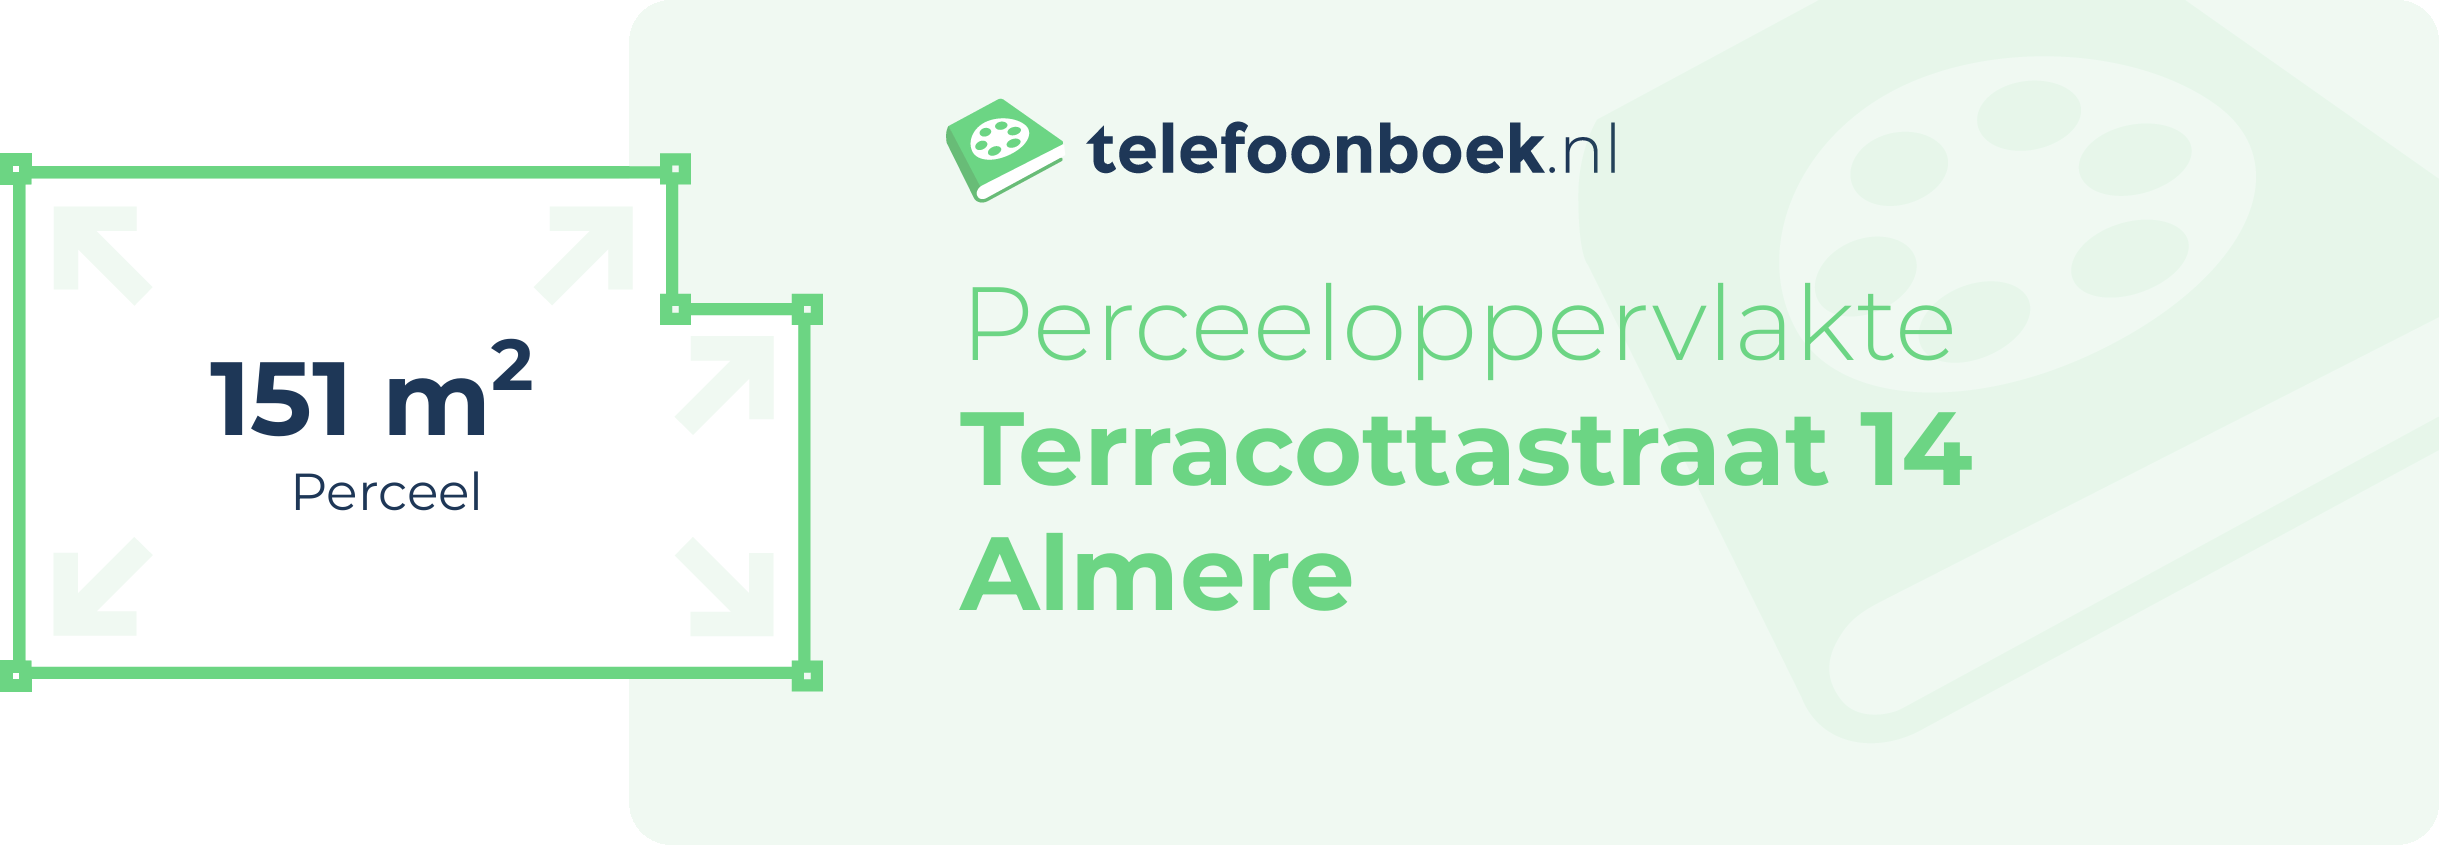 Perceeloppervlakte Terracottastraat 14 Almere